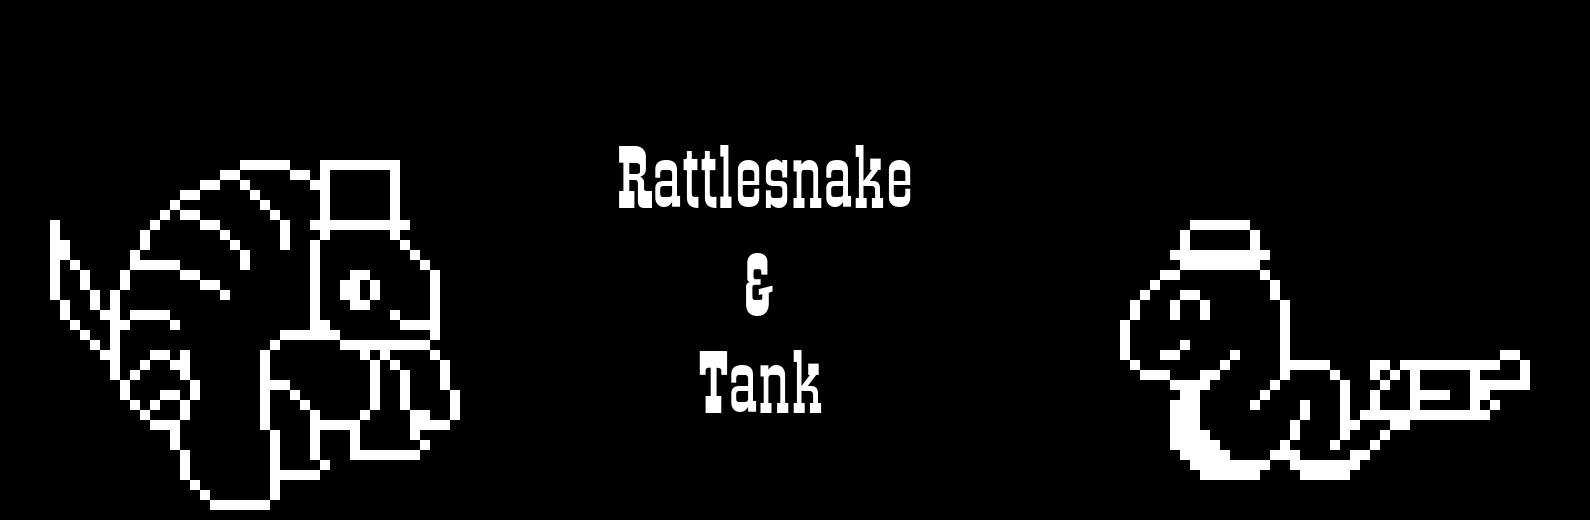 RattleSnake and Tank